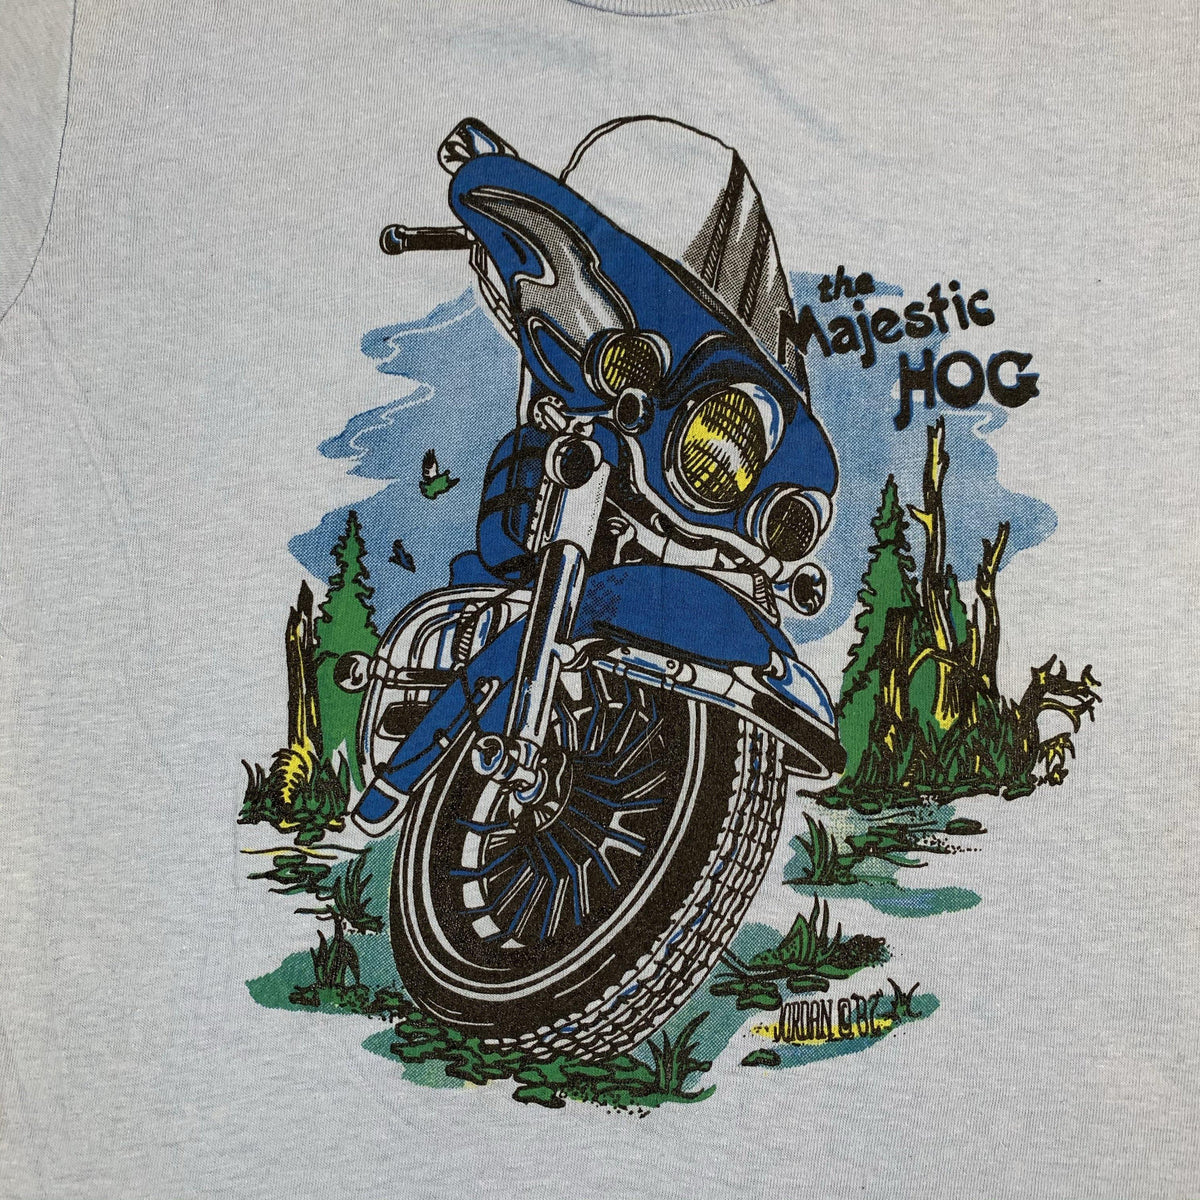 Vintage The Majestic Hog “1982” T-Shirt - jointcustodydc